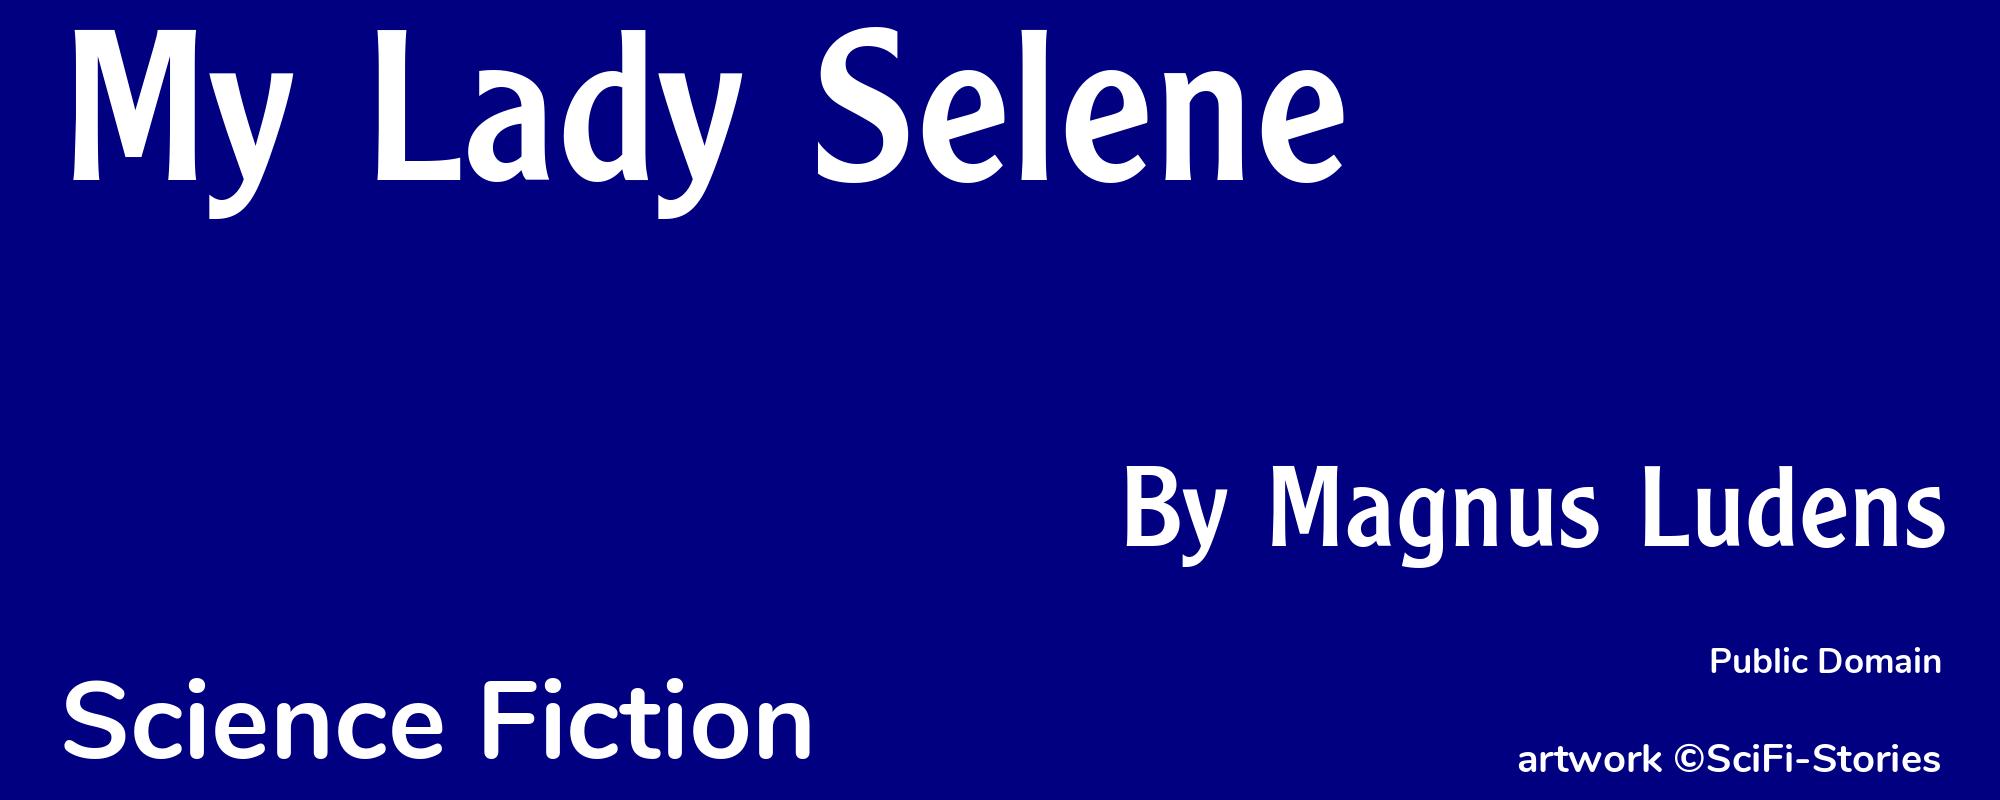 My Lady Selene - Cover